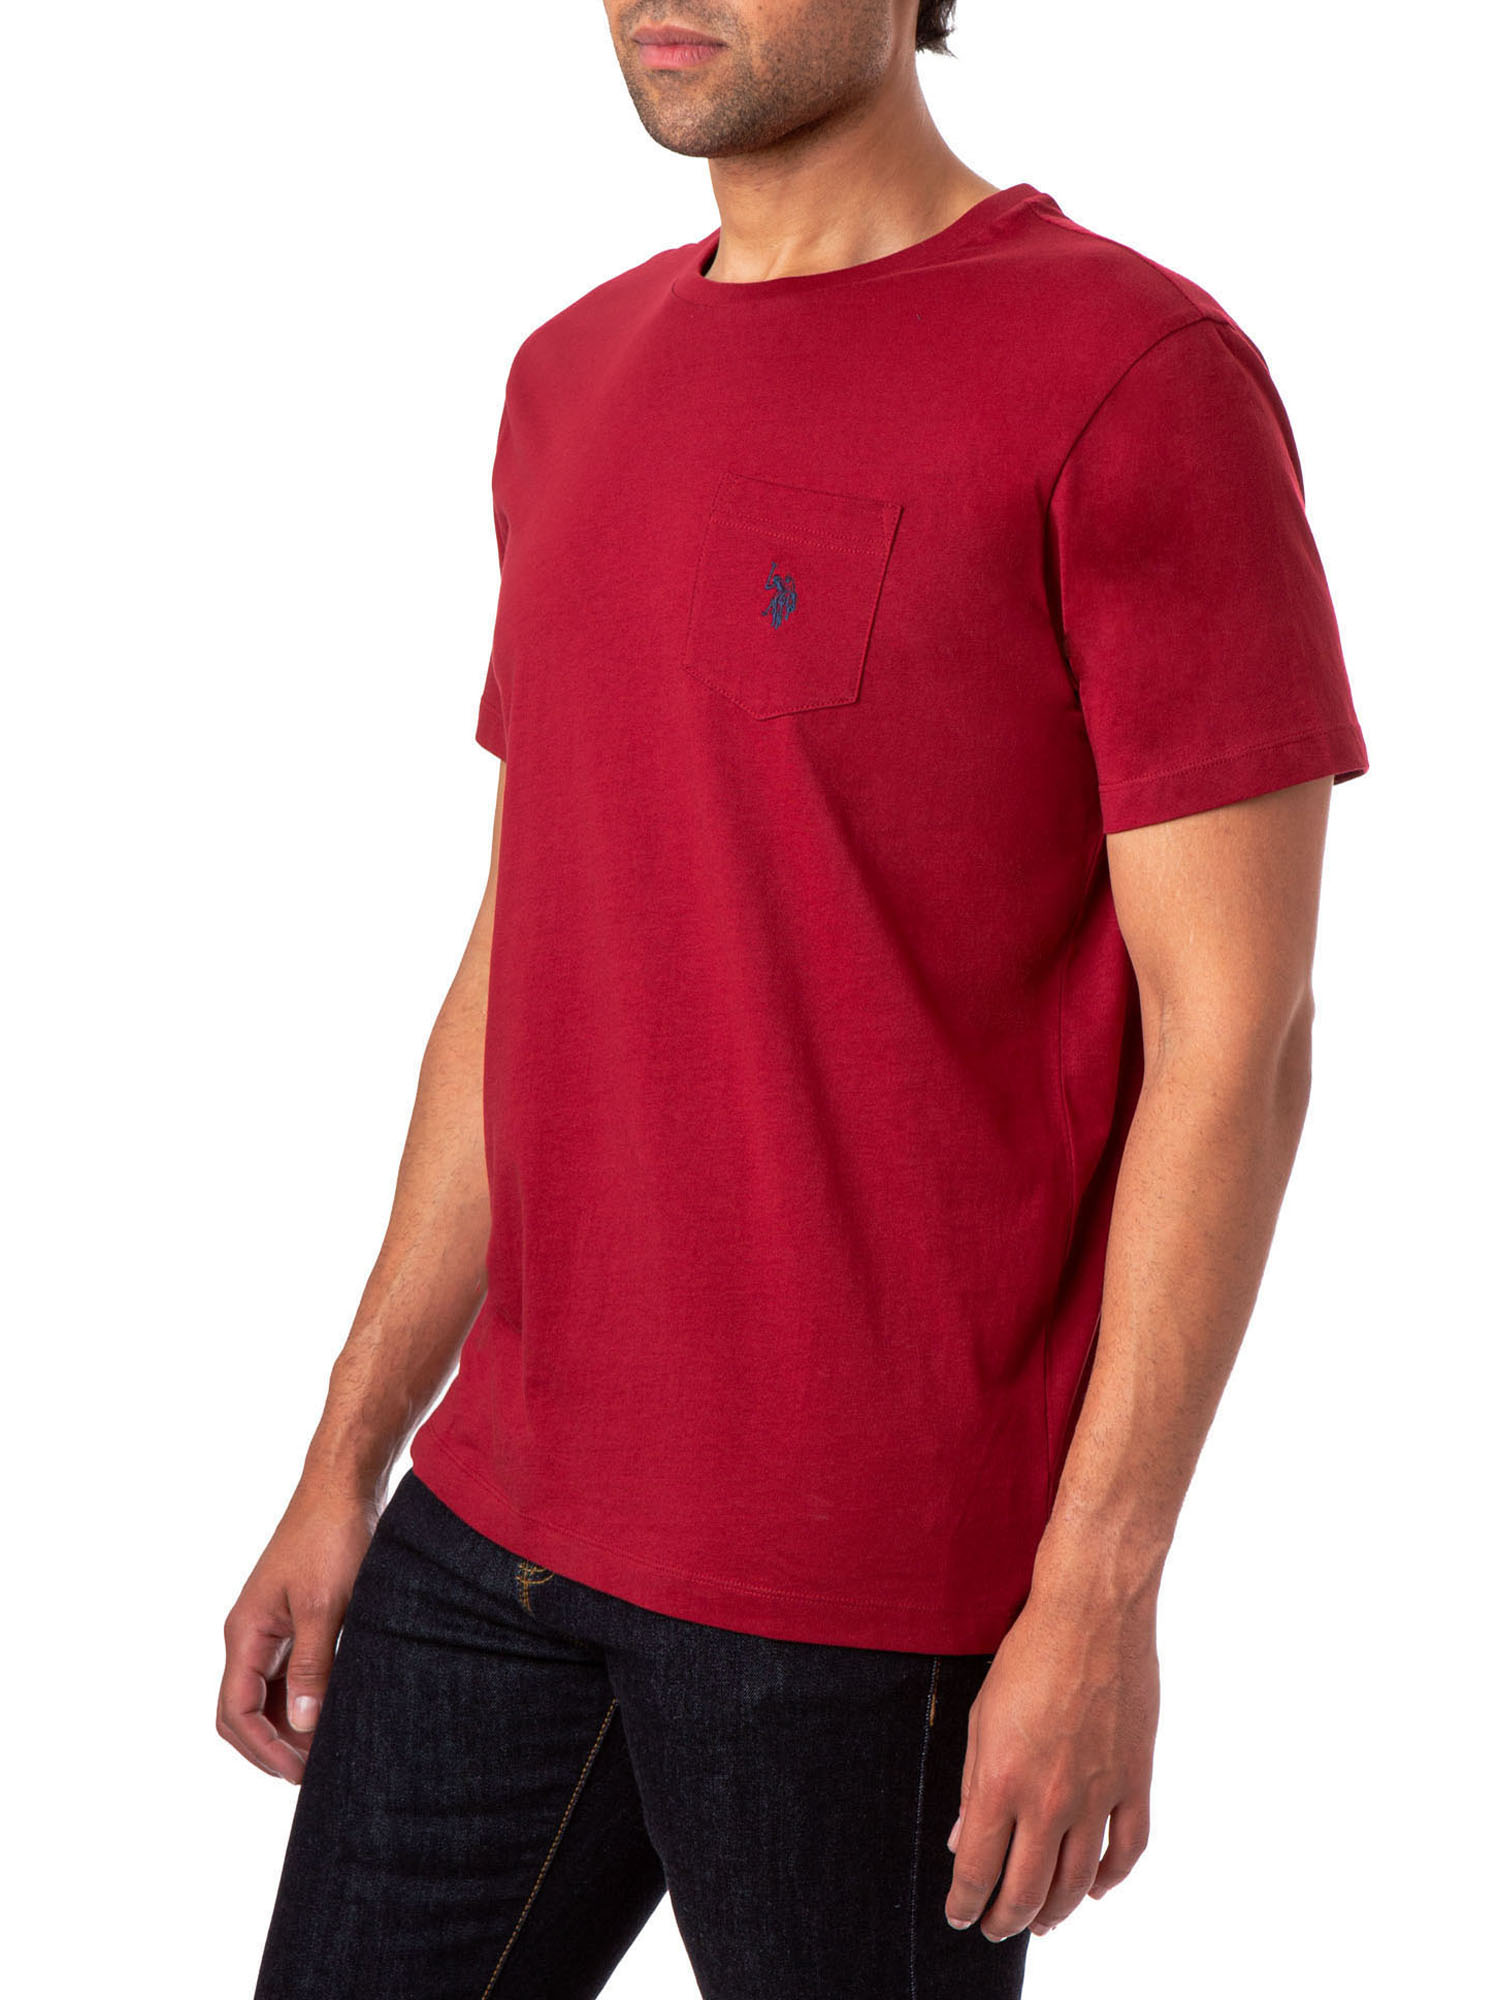 U.S. Polo Assn. Men's Pocket T-Shirt - image 2 of 3